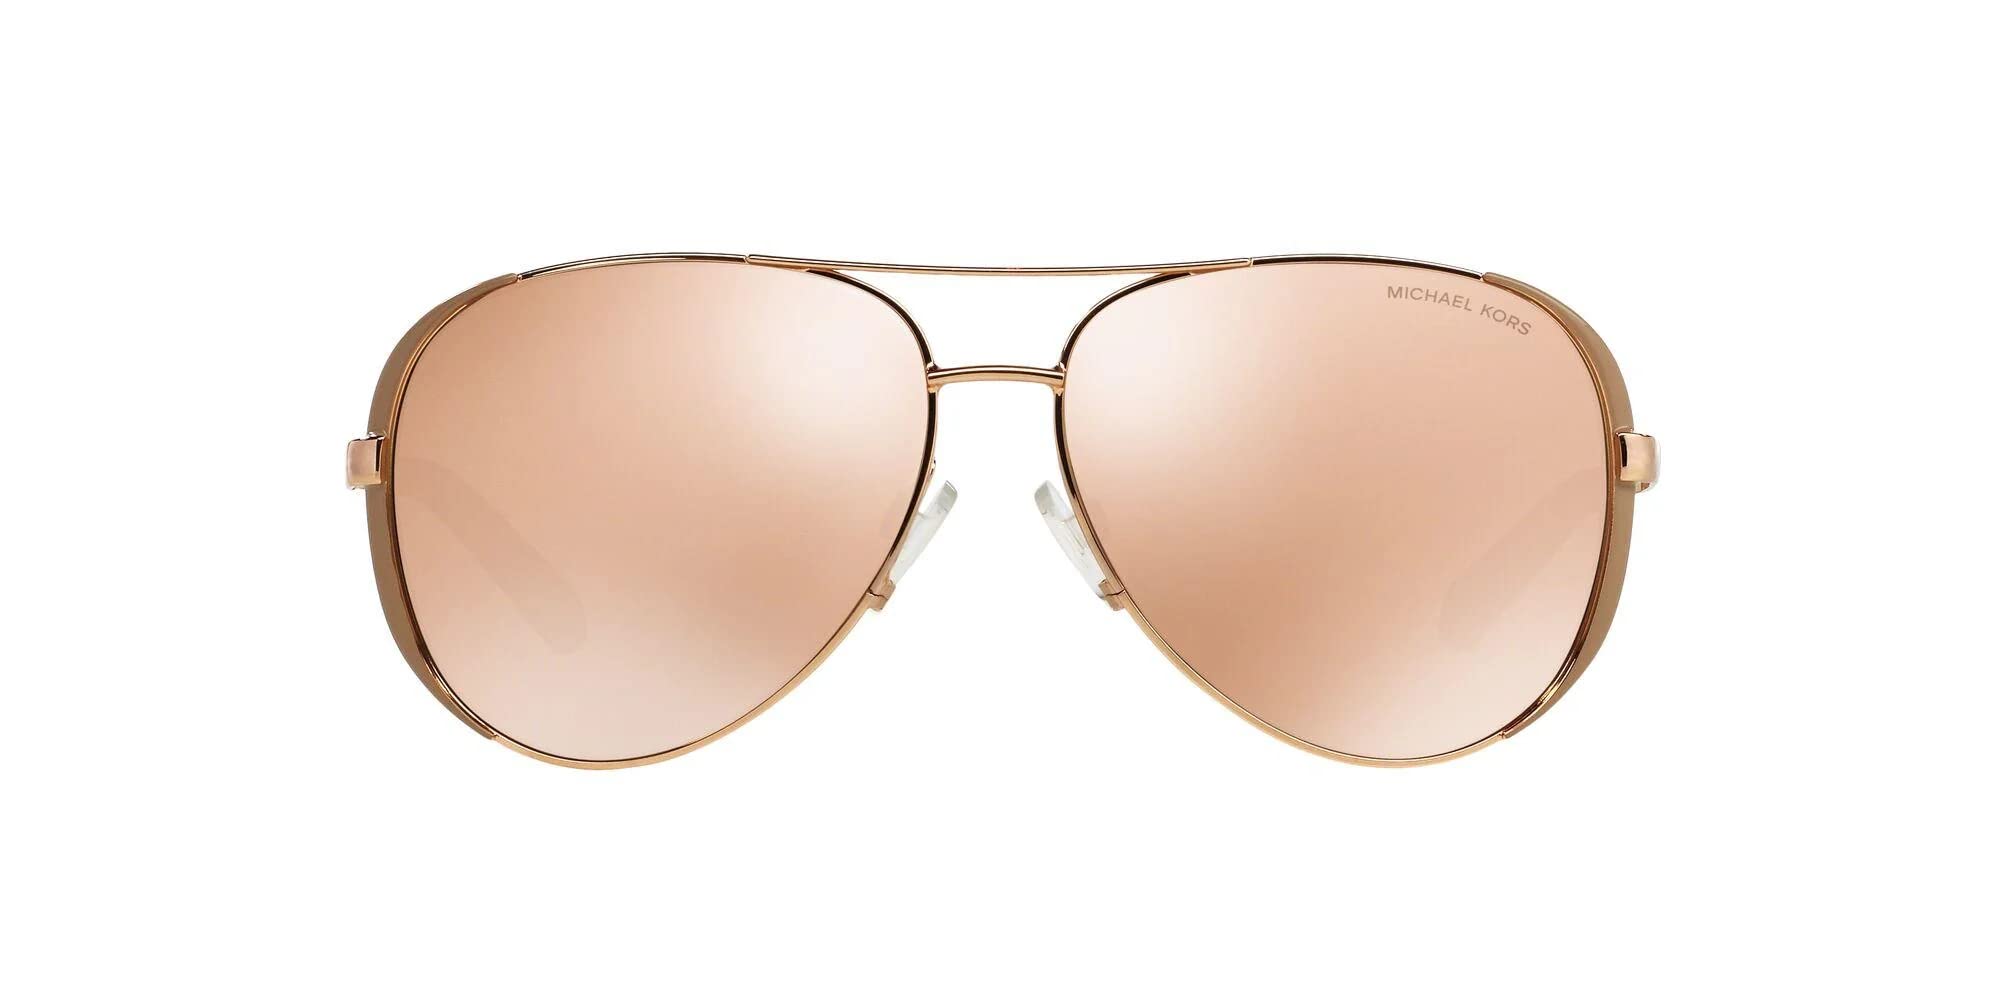 Amazoncom Michael Kors MK5004 Chelsea Sunglasses GoldBrown  Clothing  Shoes  Jewelry